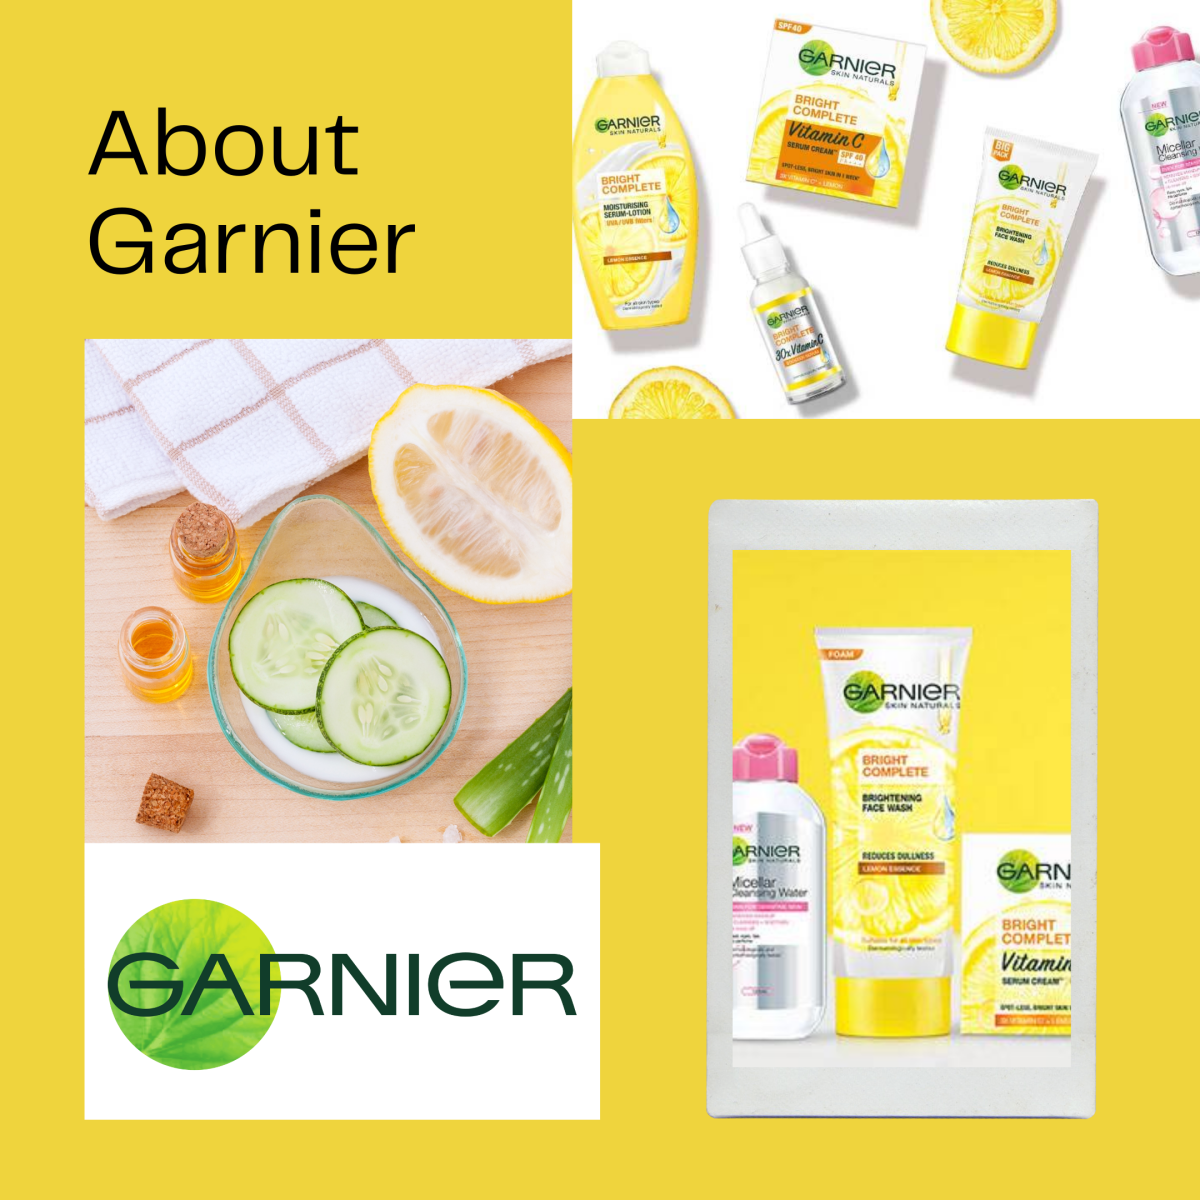 garnier-light-complete-nourishing-hand-cream-review